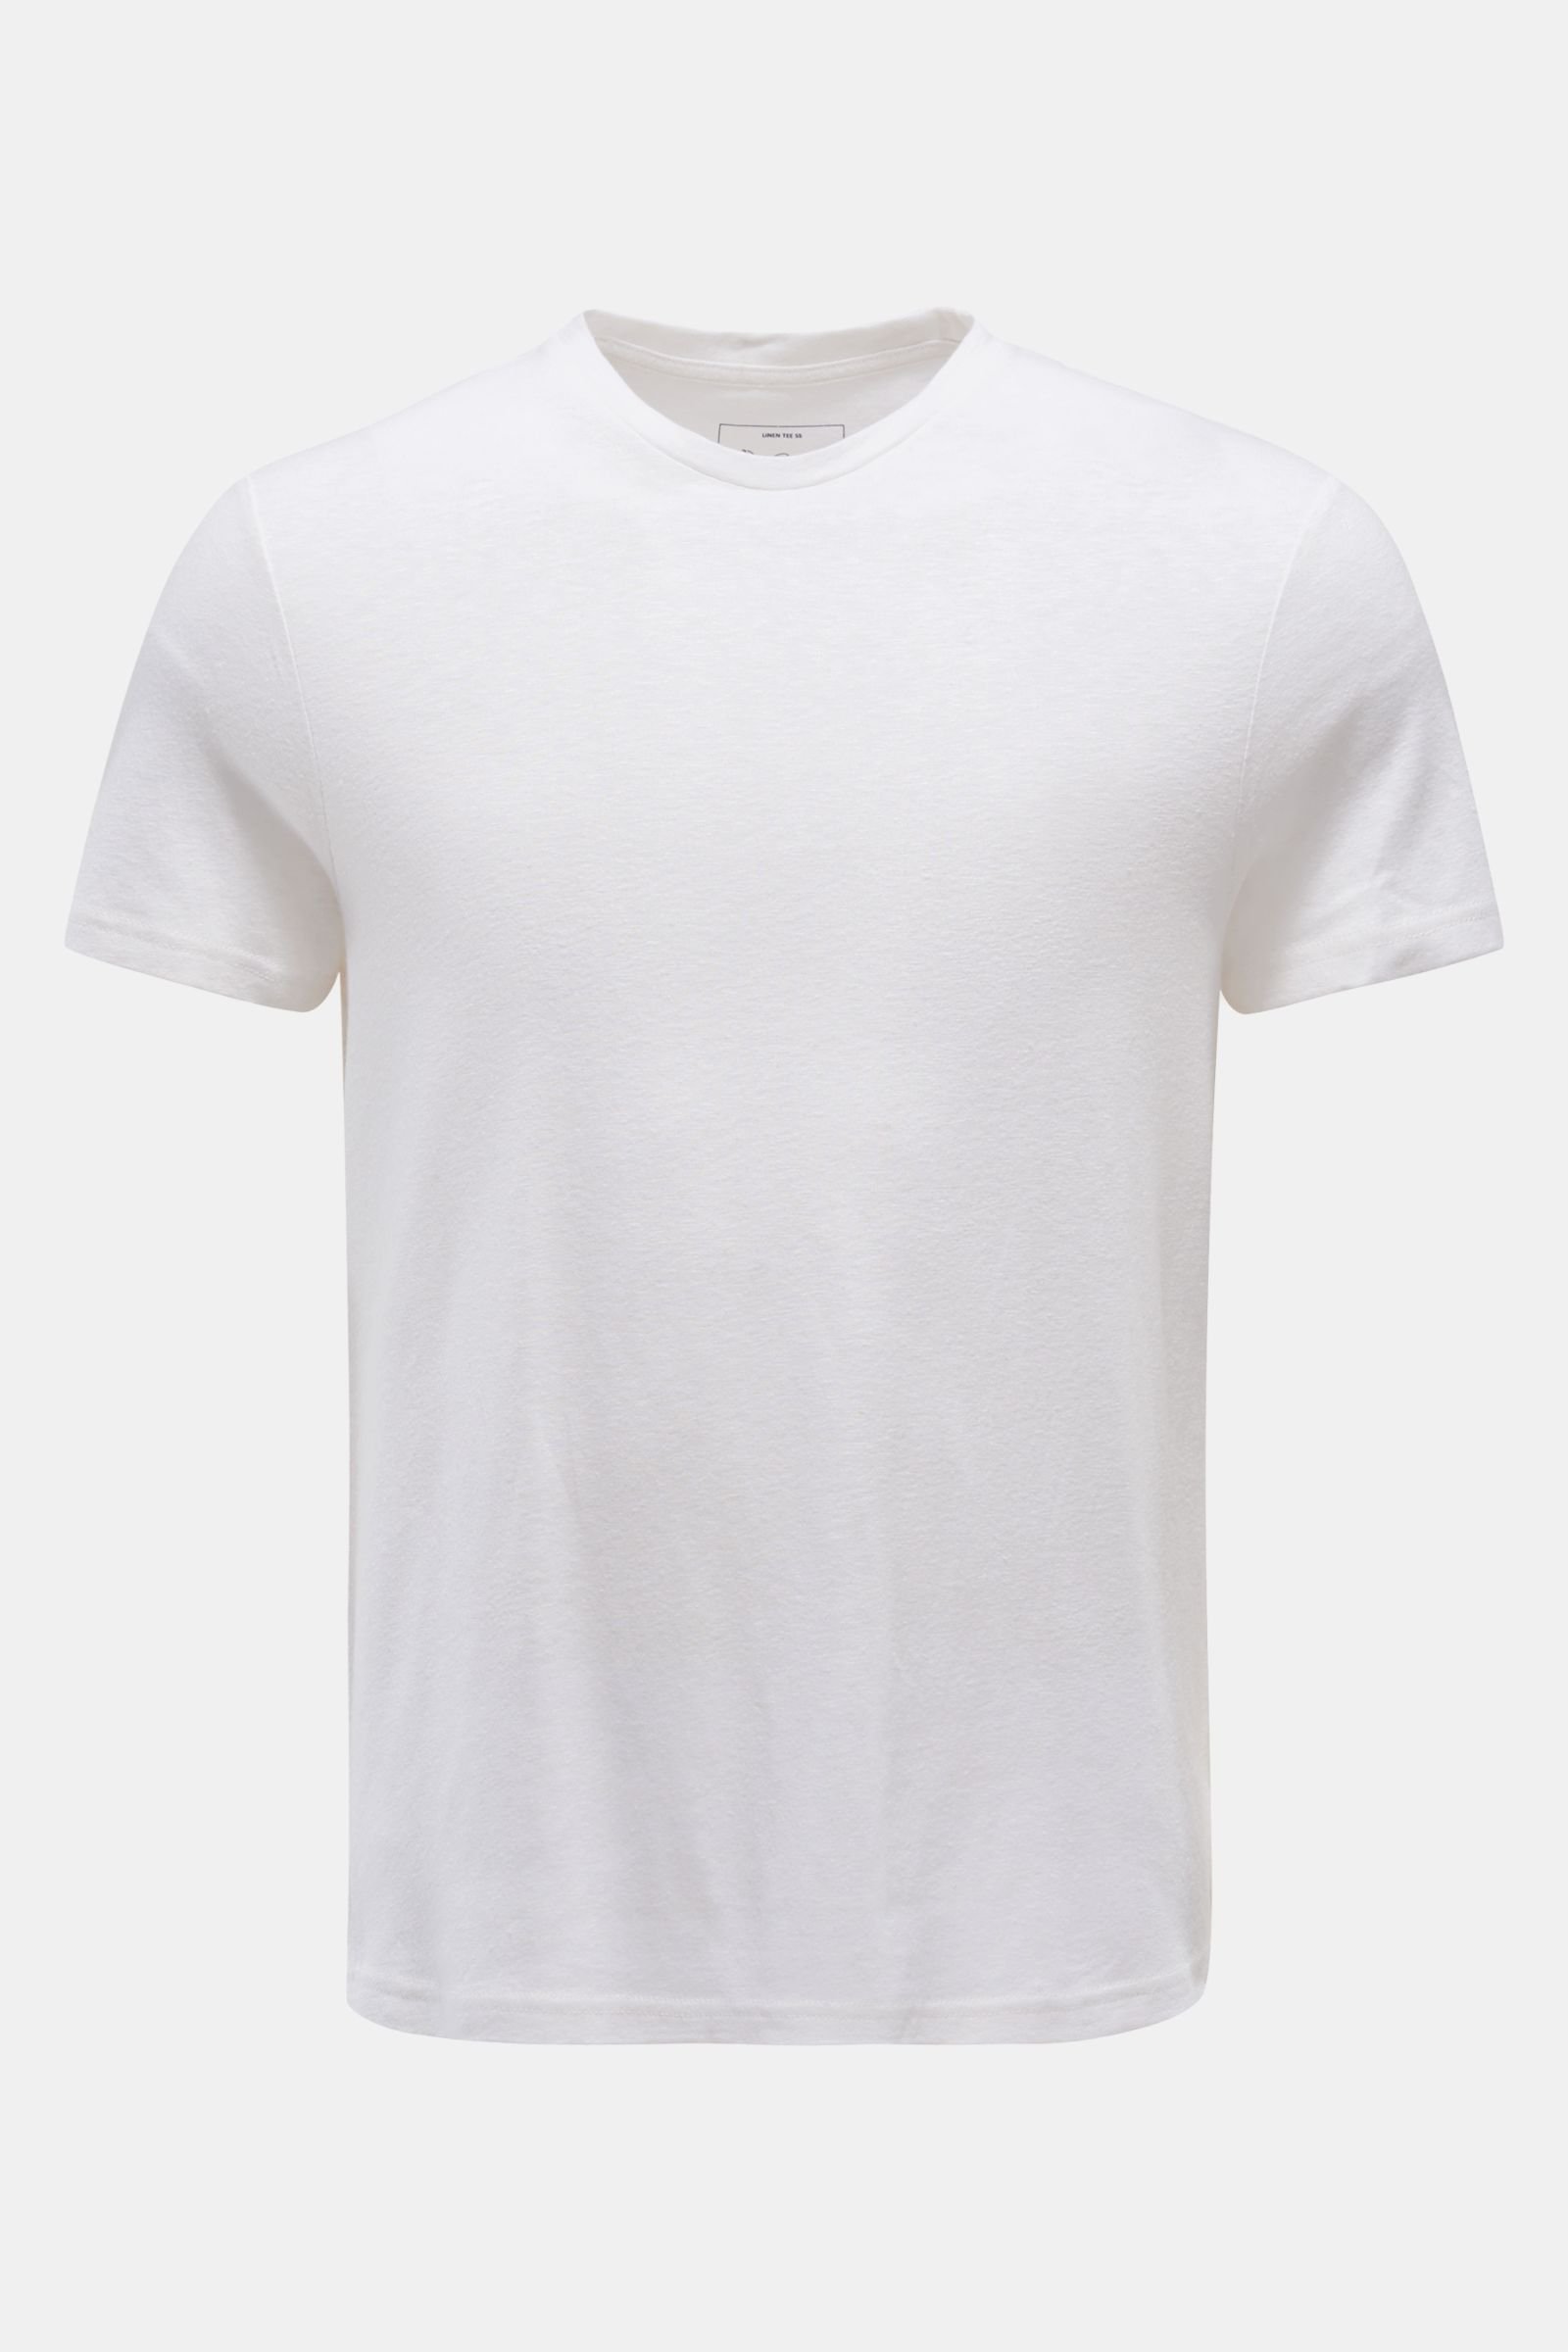 Crew neck T-shirt 'Linen Tee' white